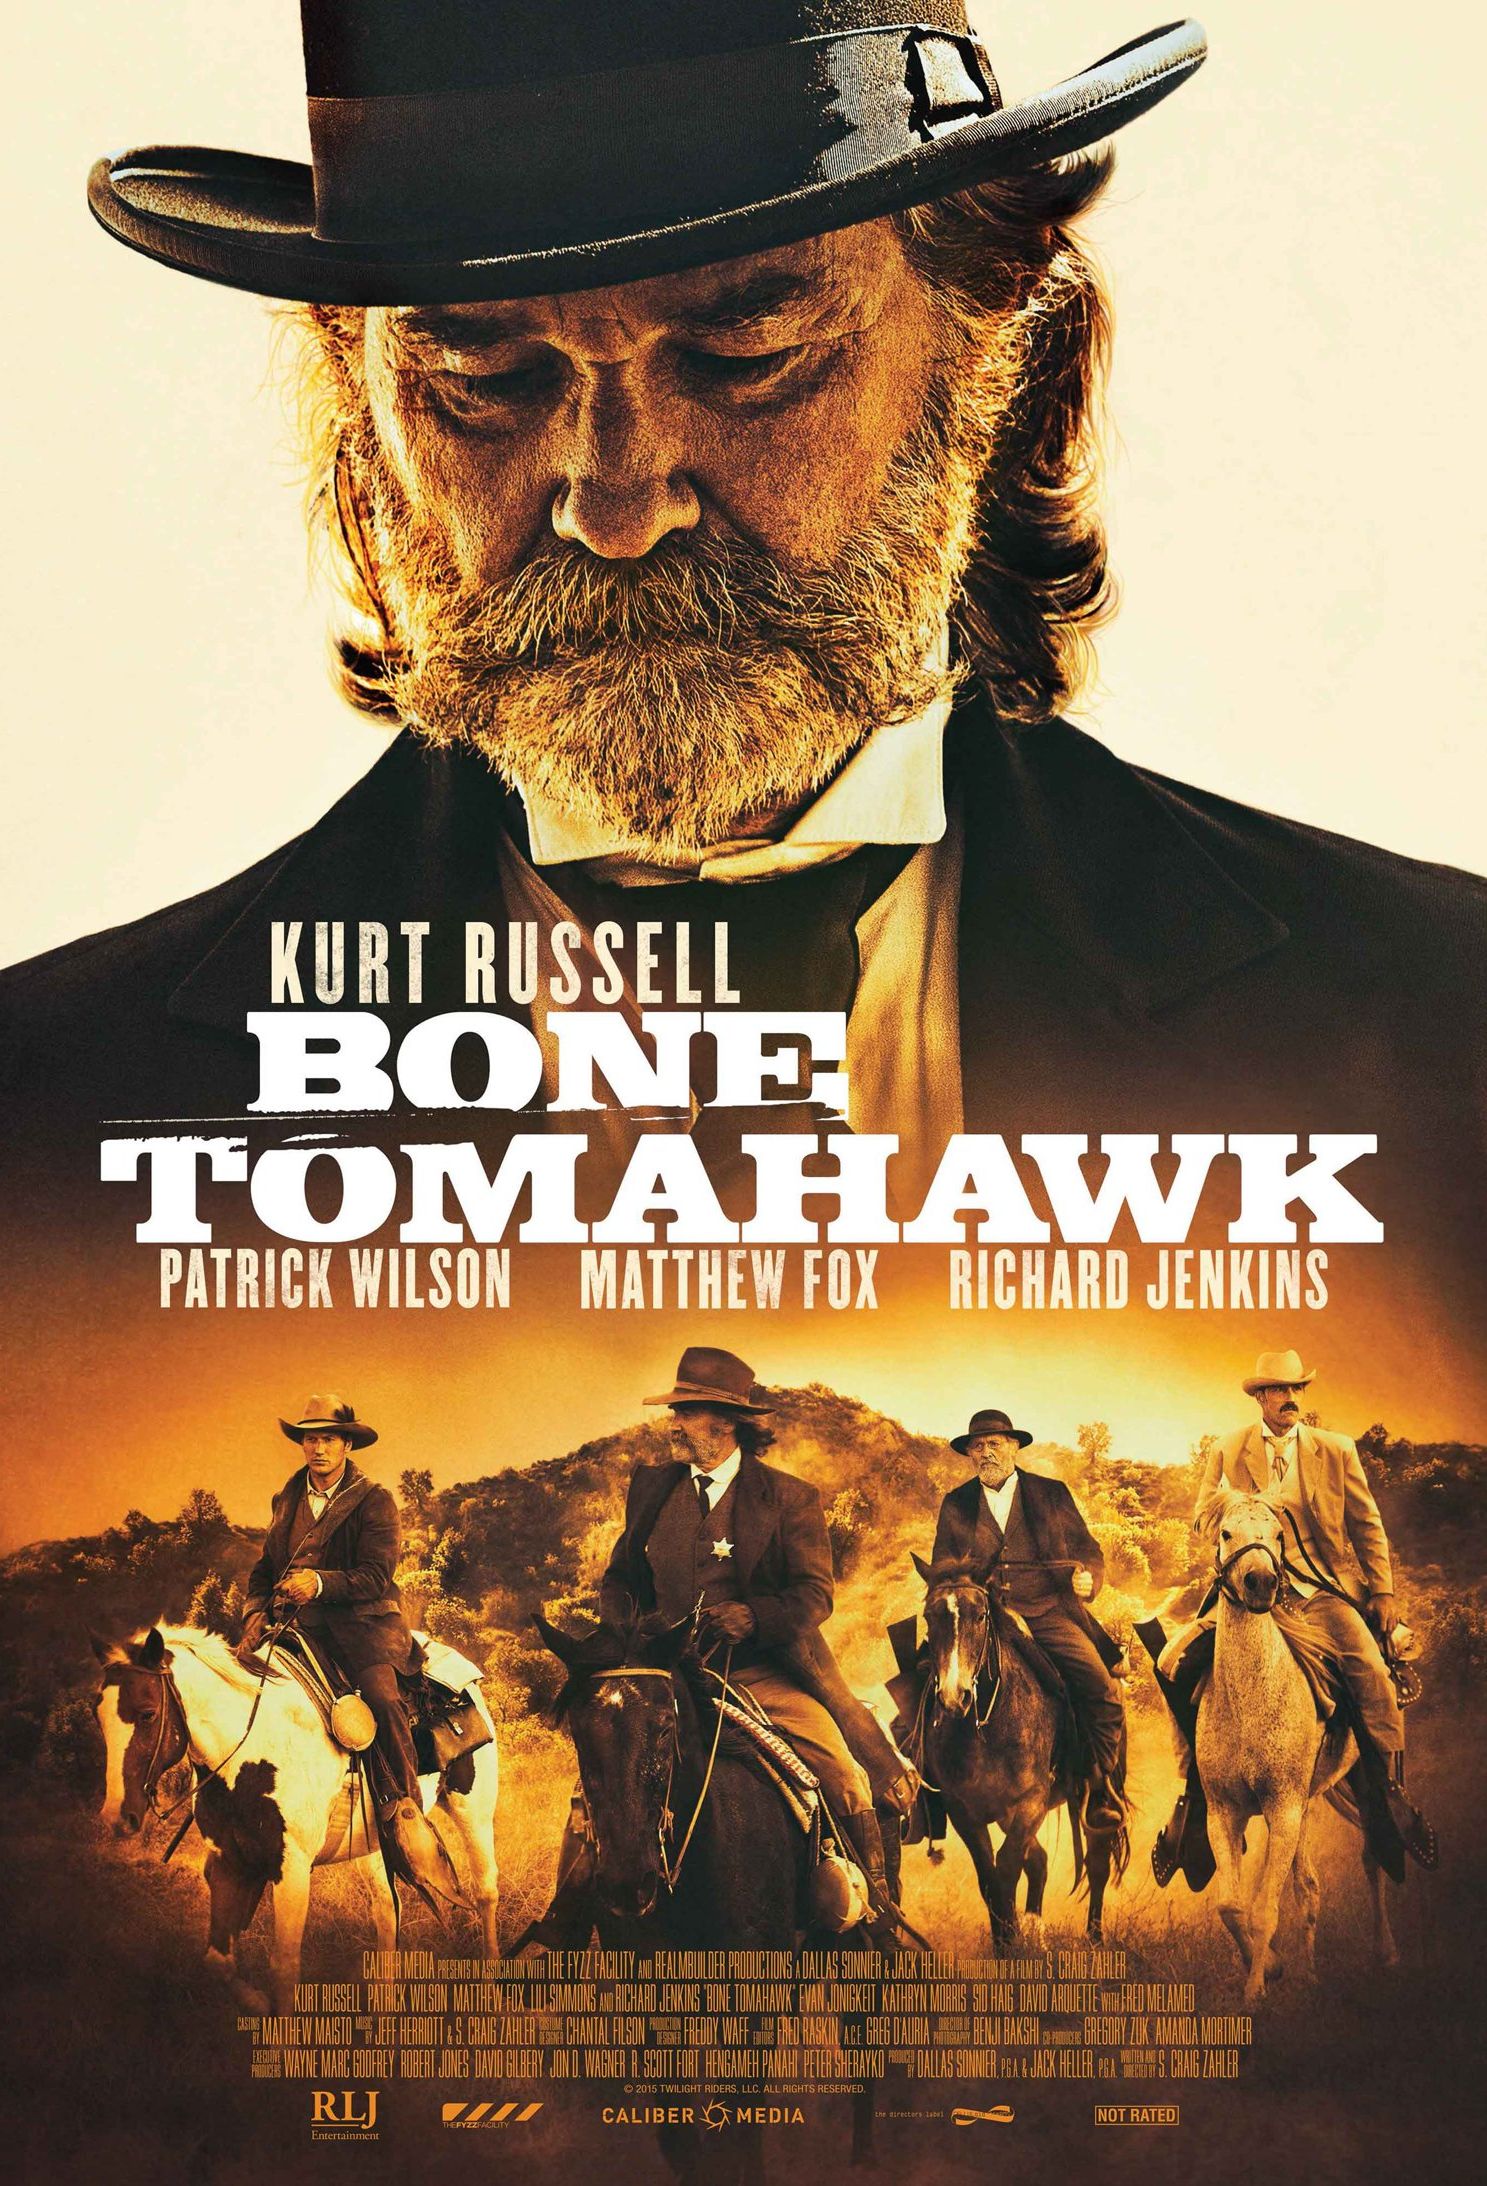 Bone Tomahawk - Kurt Russell Poster